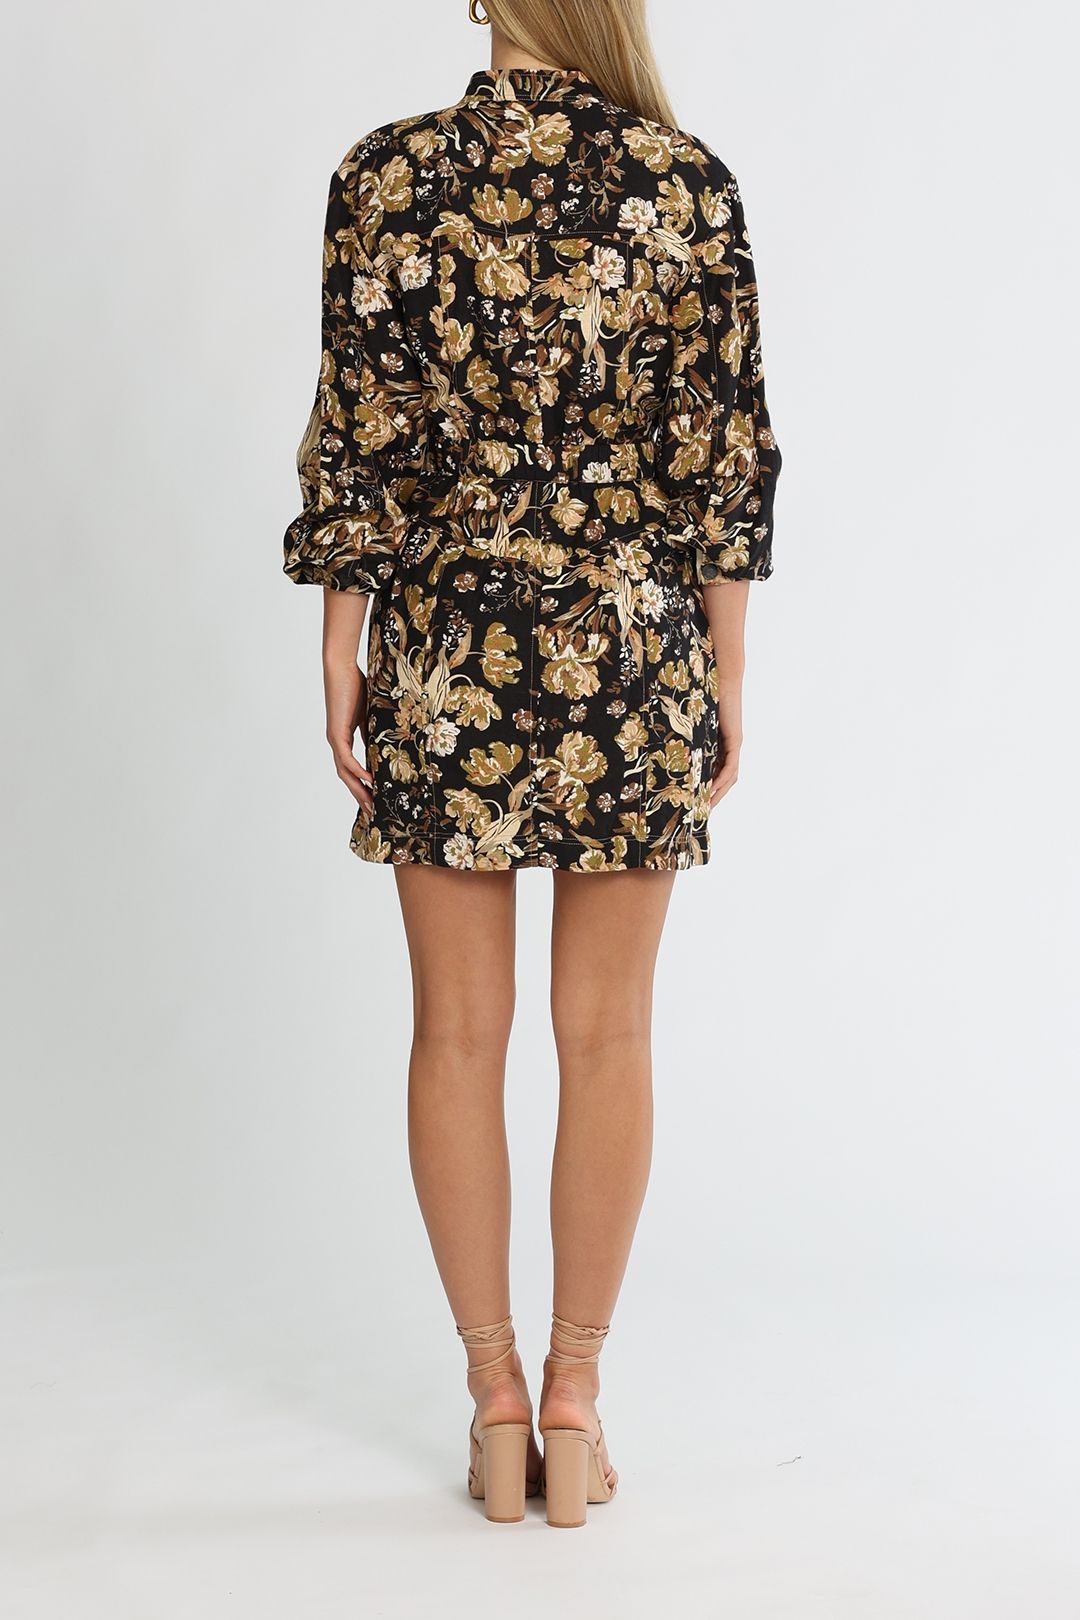 Shona Joy Palermo Panelled Mini Dress Multi Floral